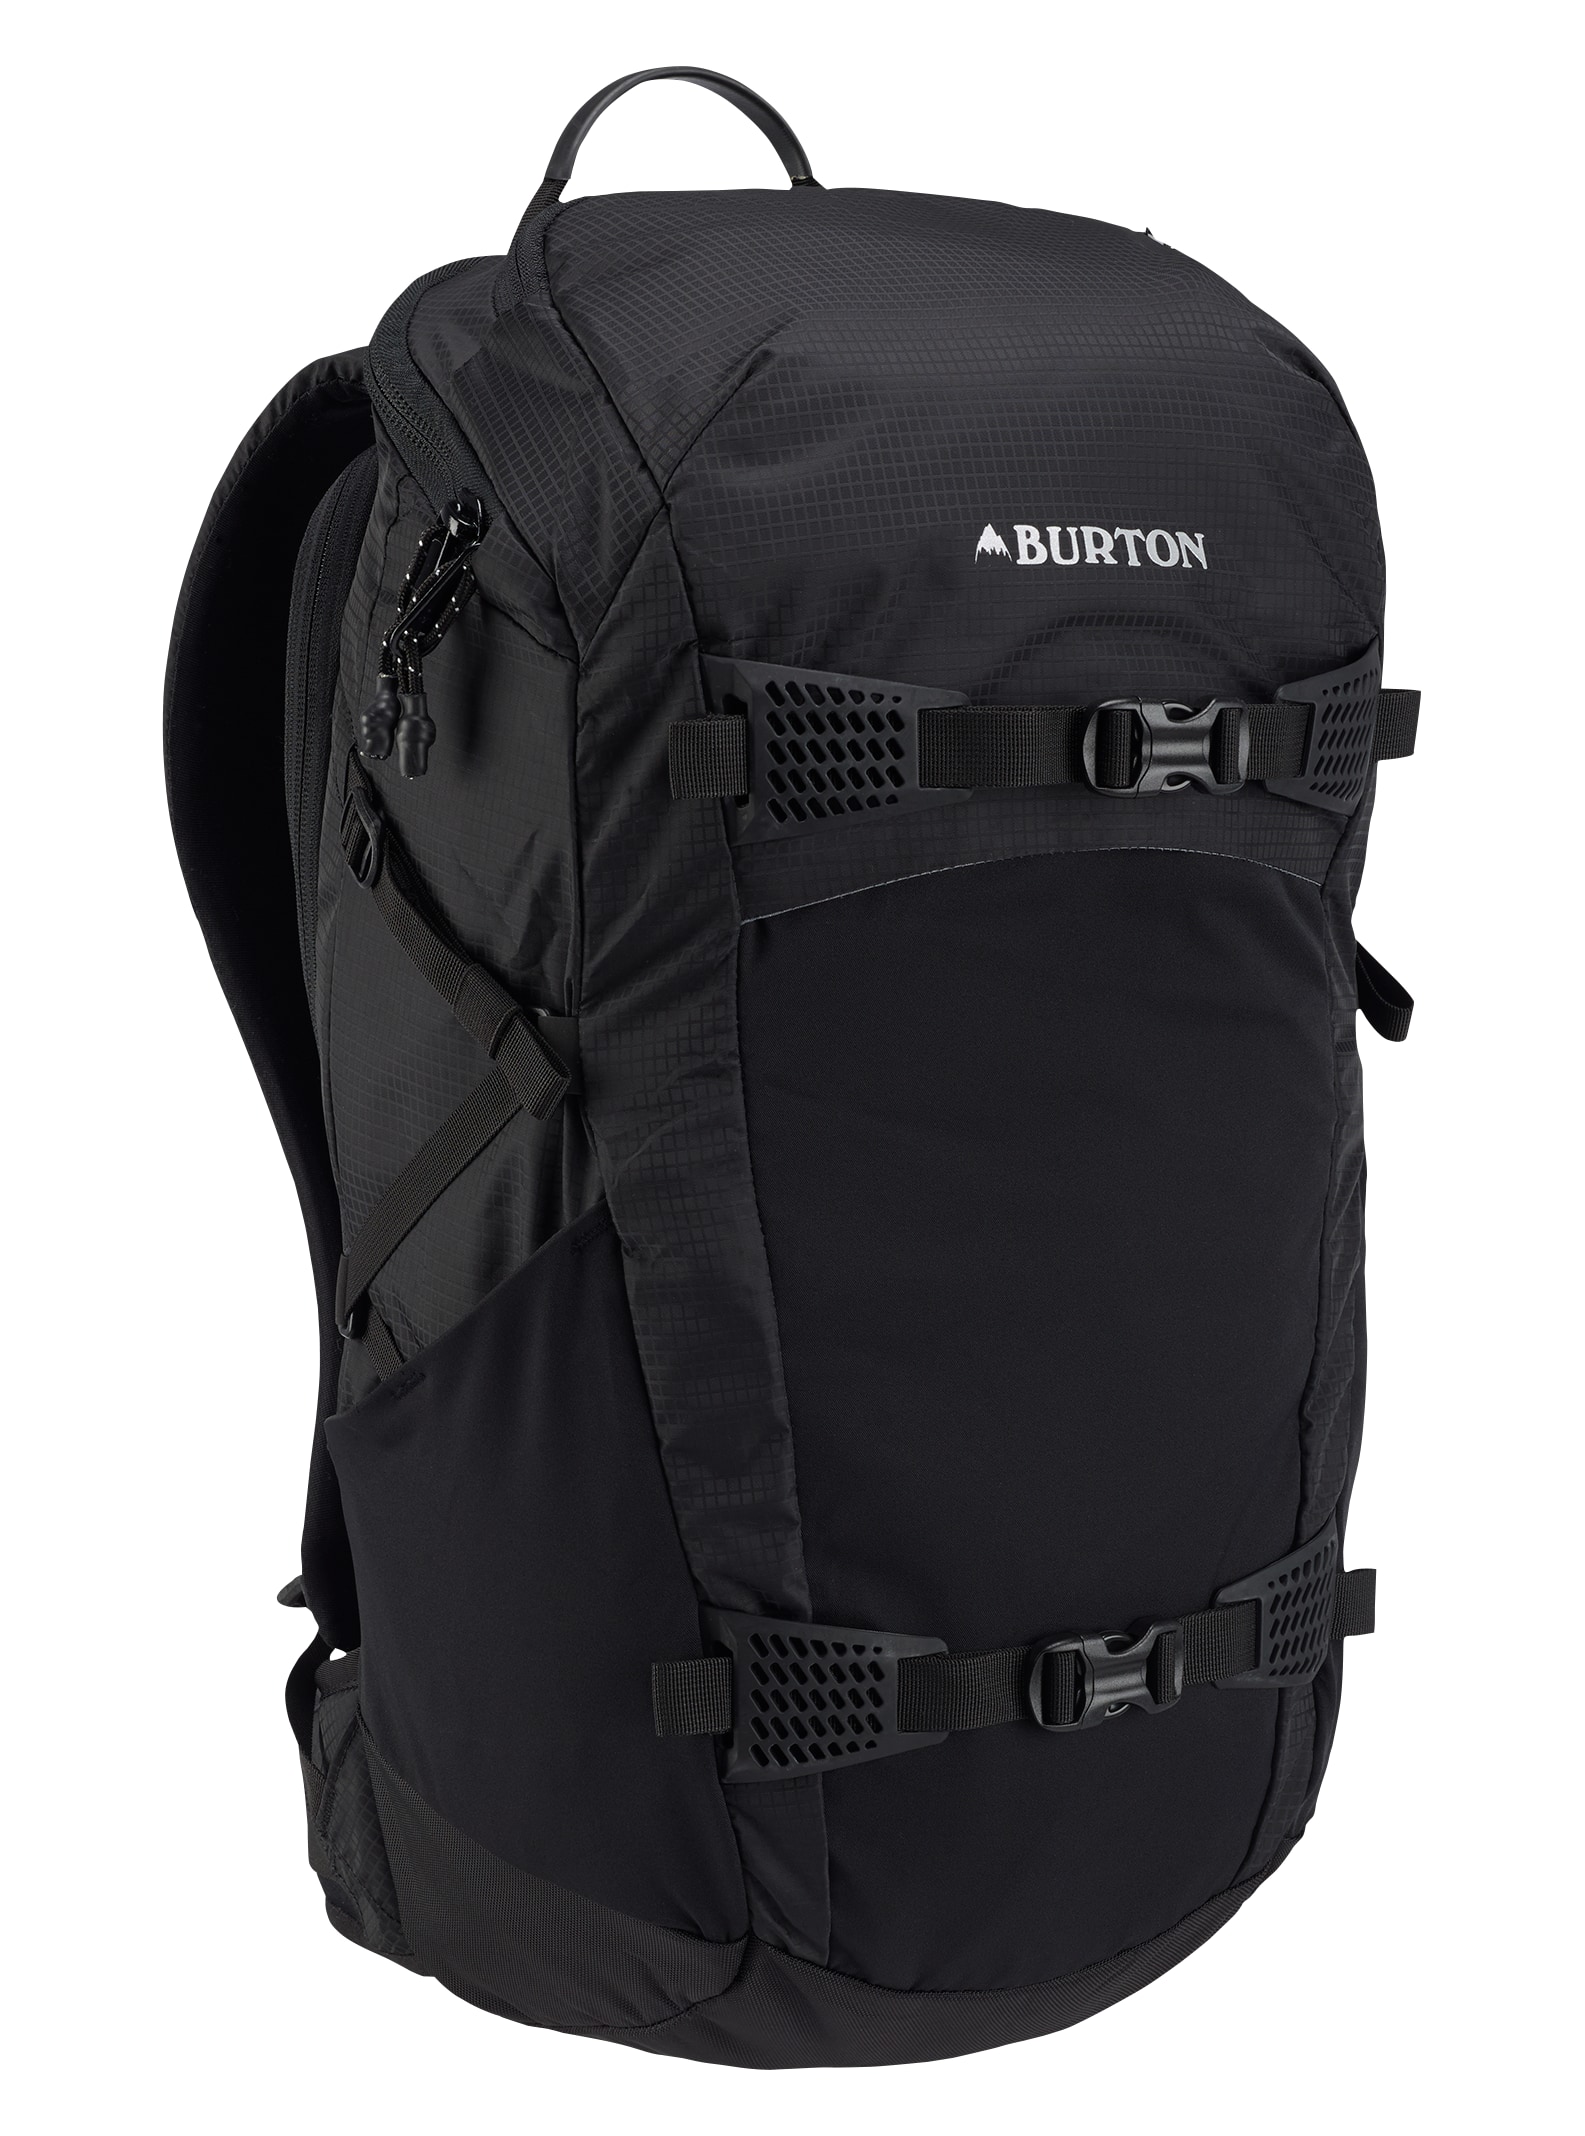 Burton Day Hiker 31L Backpack | Burton.com Spring 2020 US